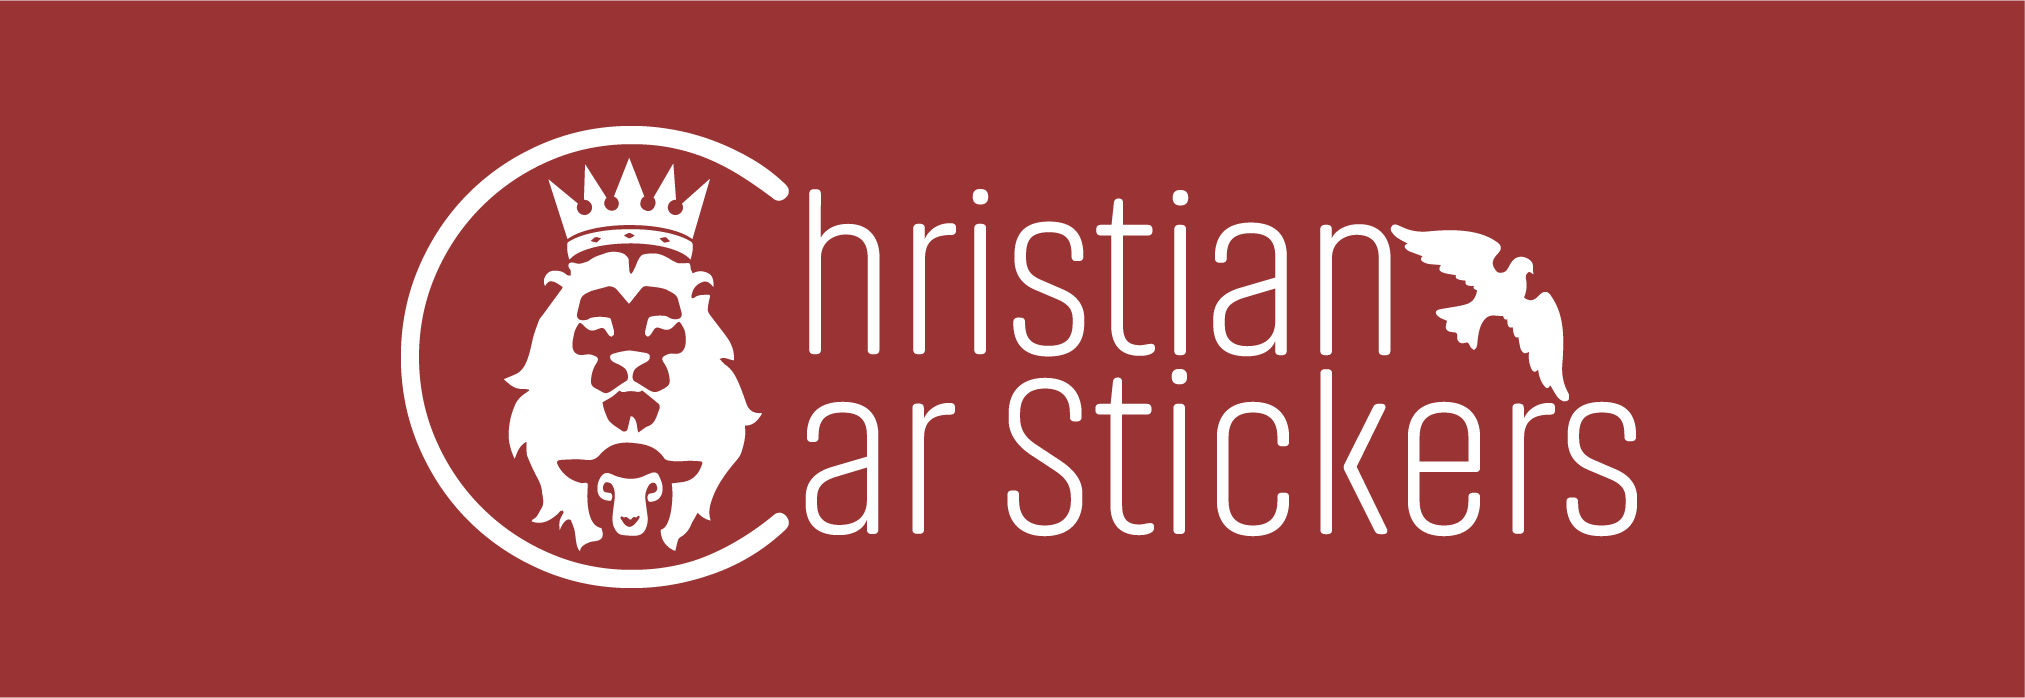 Christian Car Stickers